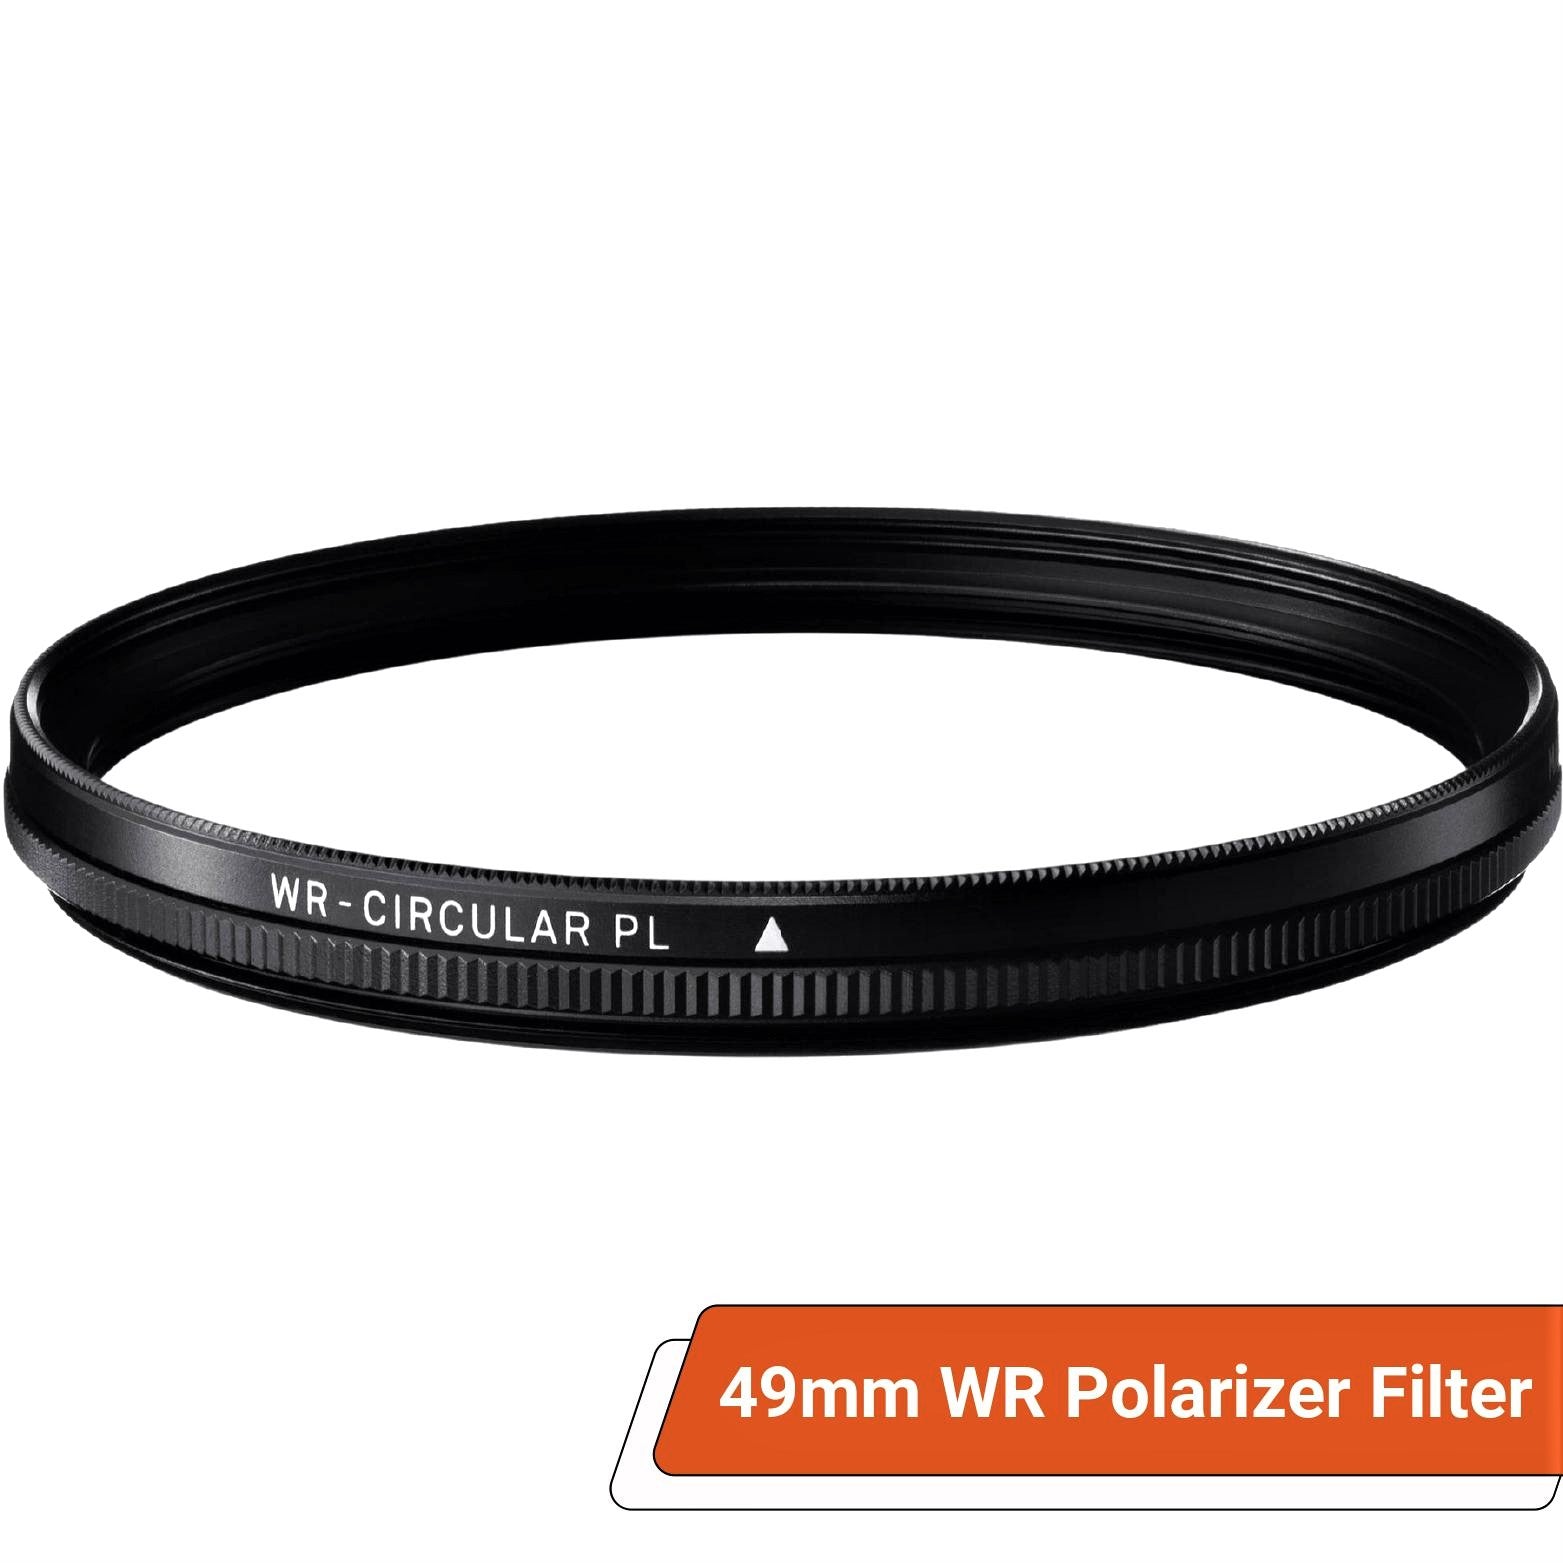 Sigma 49mm WR (Water Repellent) Circular Polarizer Filter